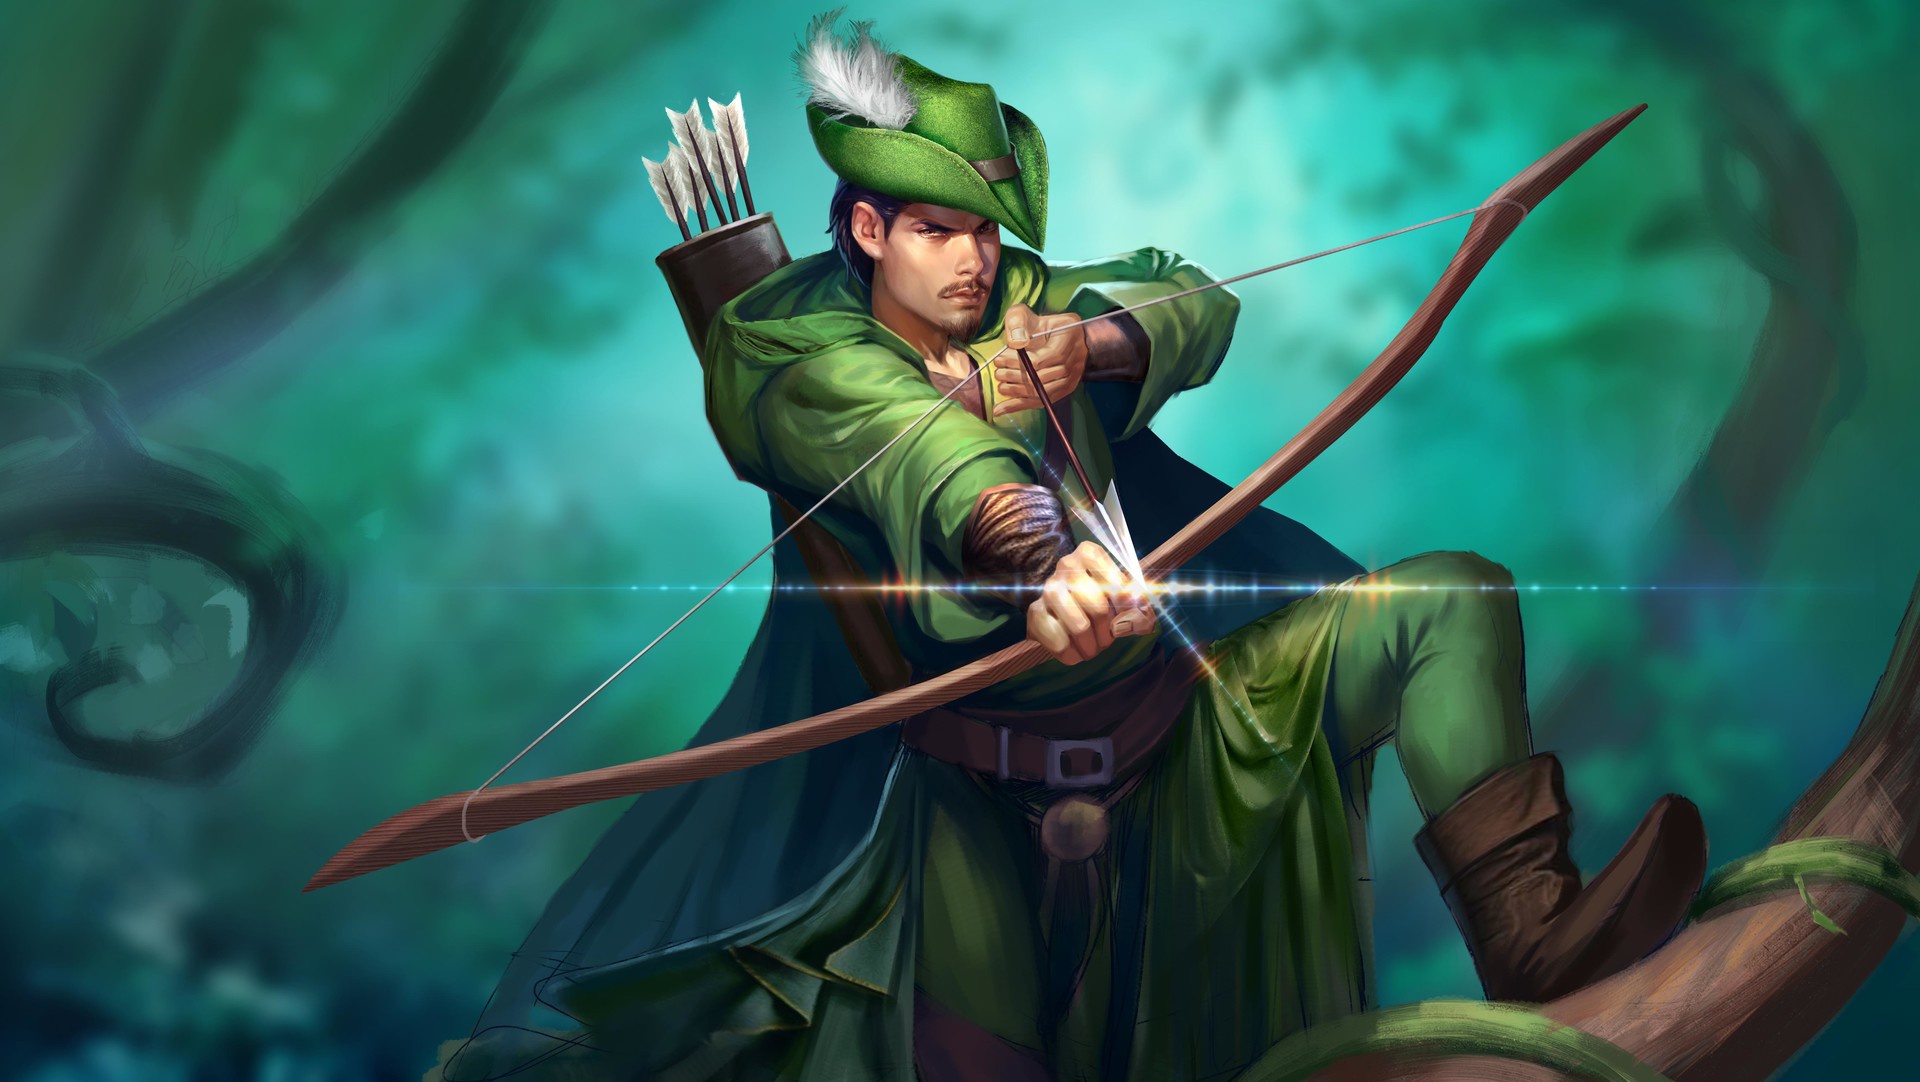 Baixar papel de parede para celular de Fantasia, Arqueiro, Robin Hood gratuito.